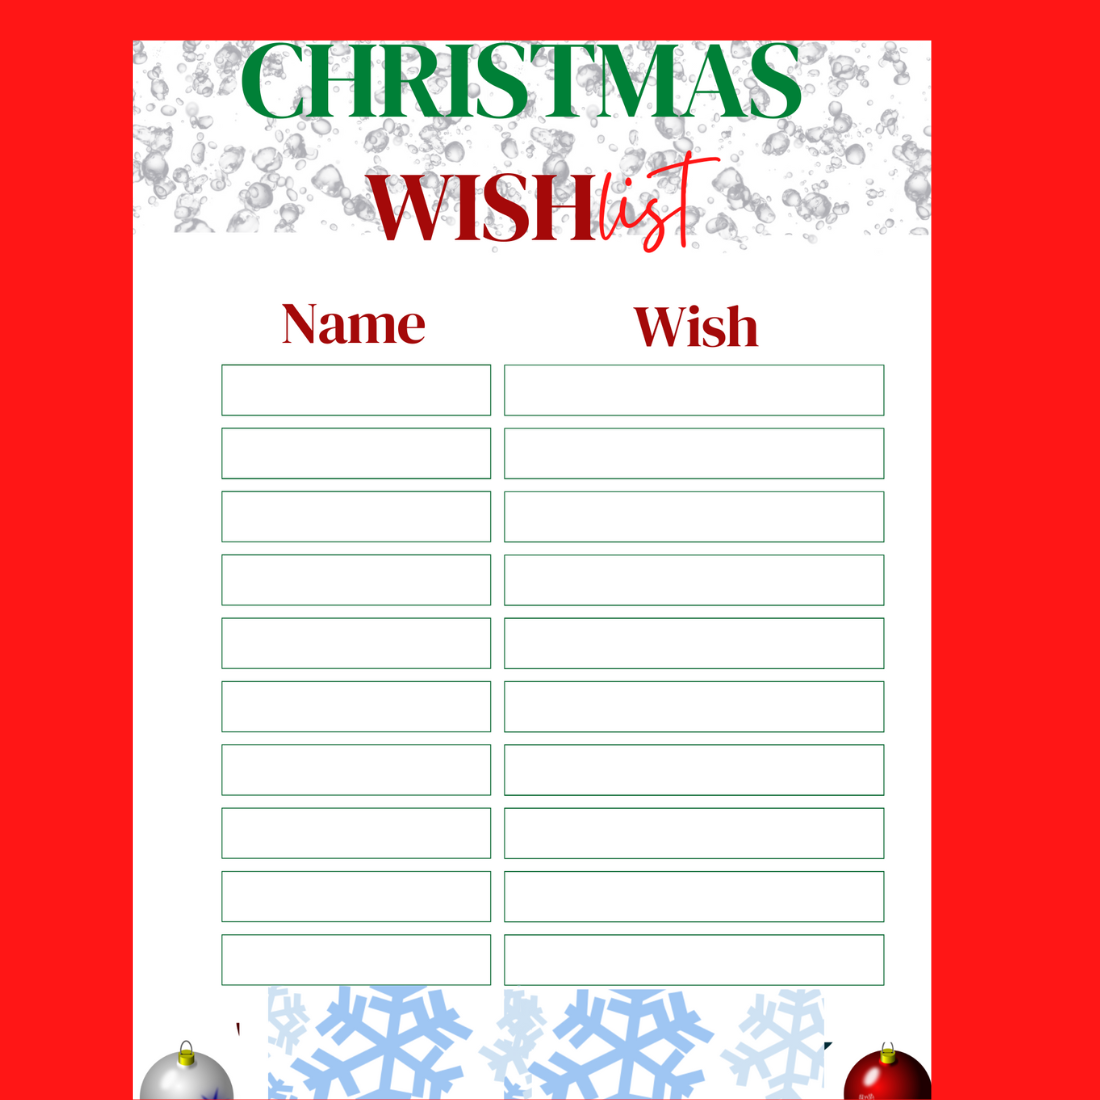 Christmas Wish List Design Template pinterest image.